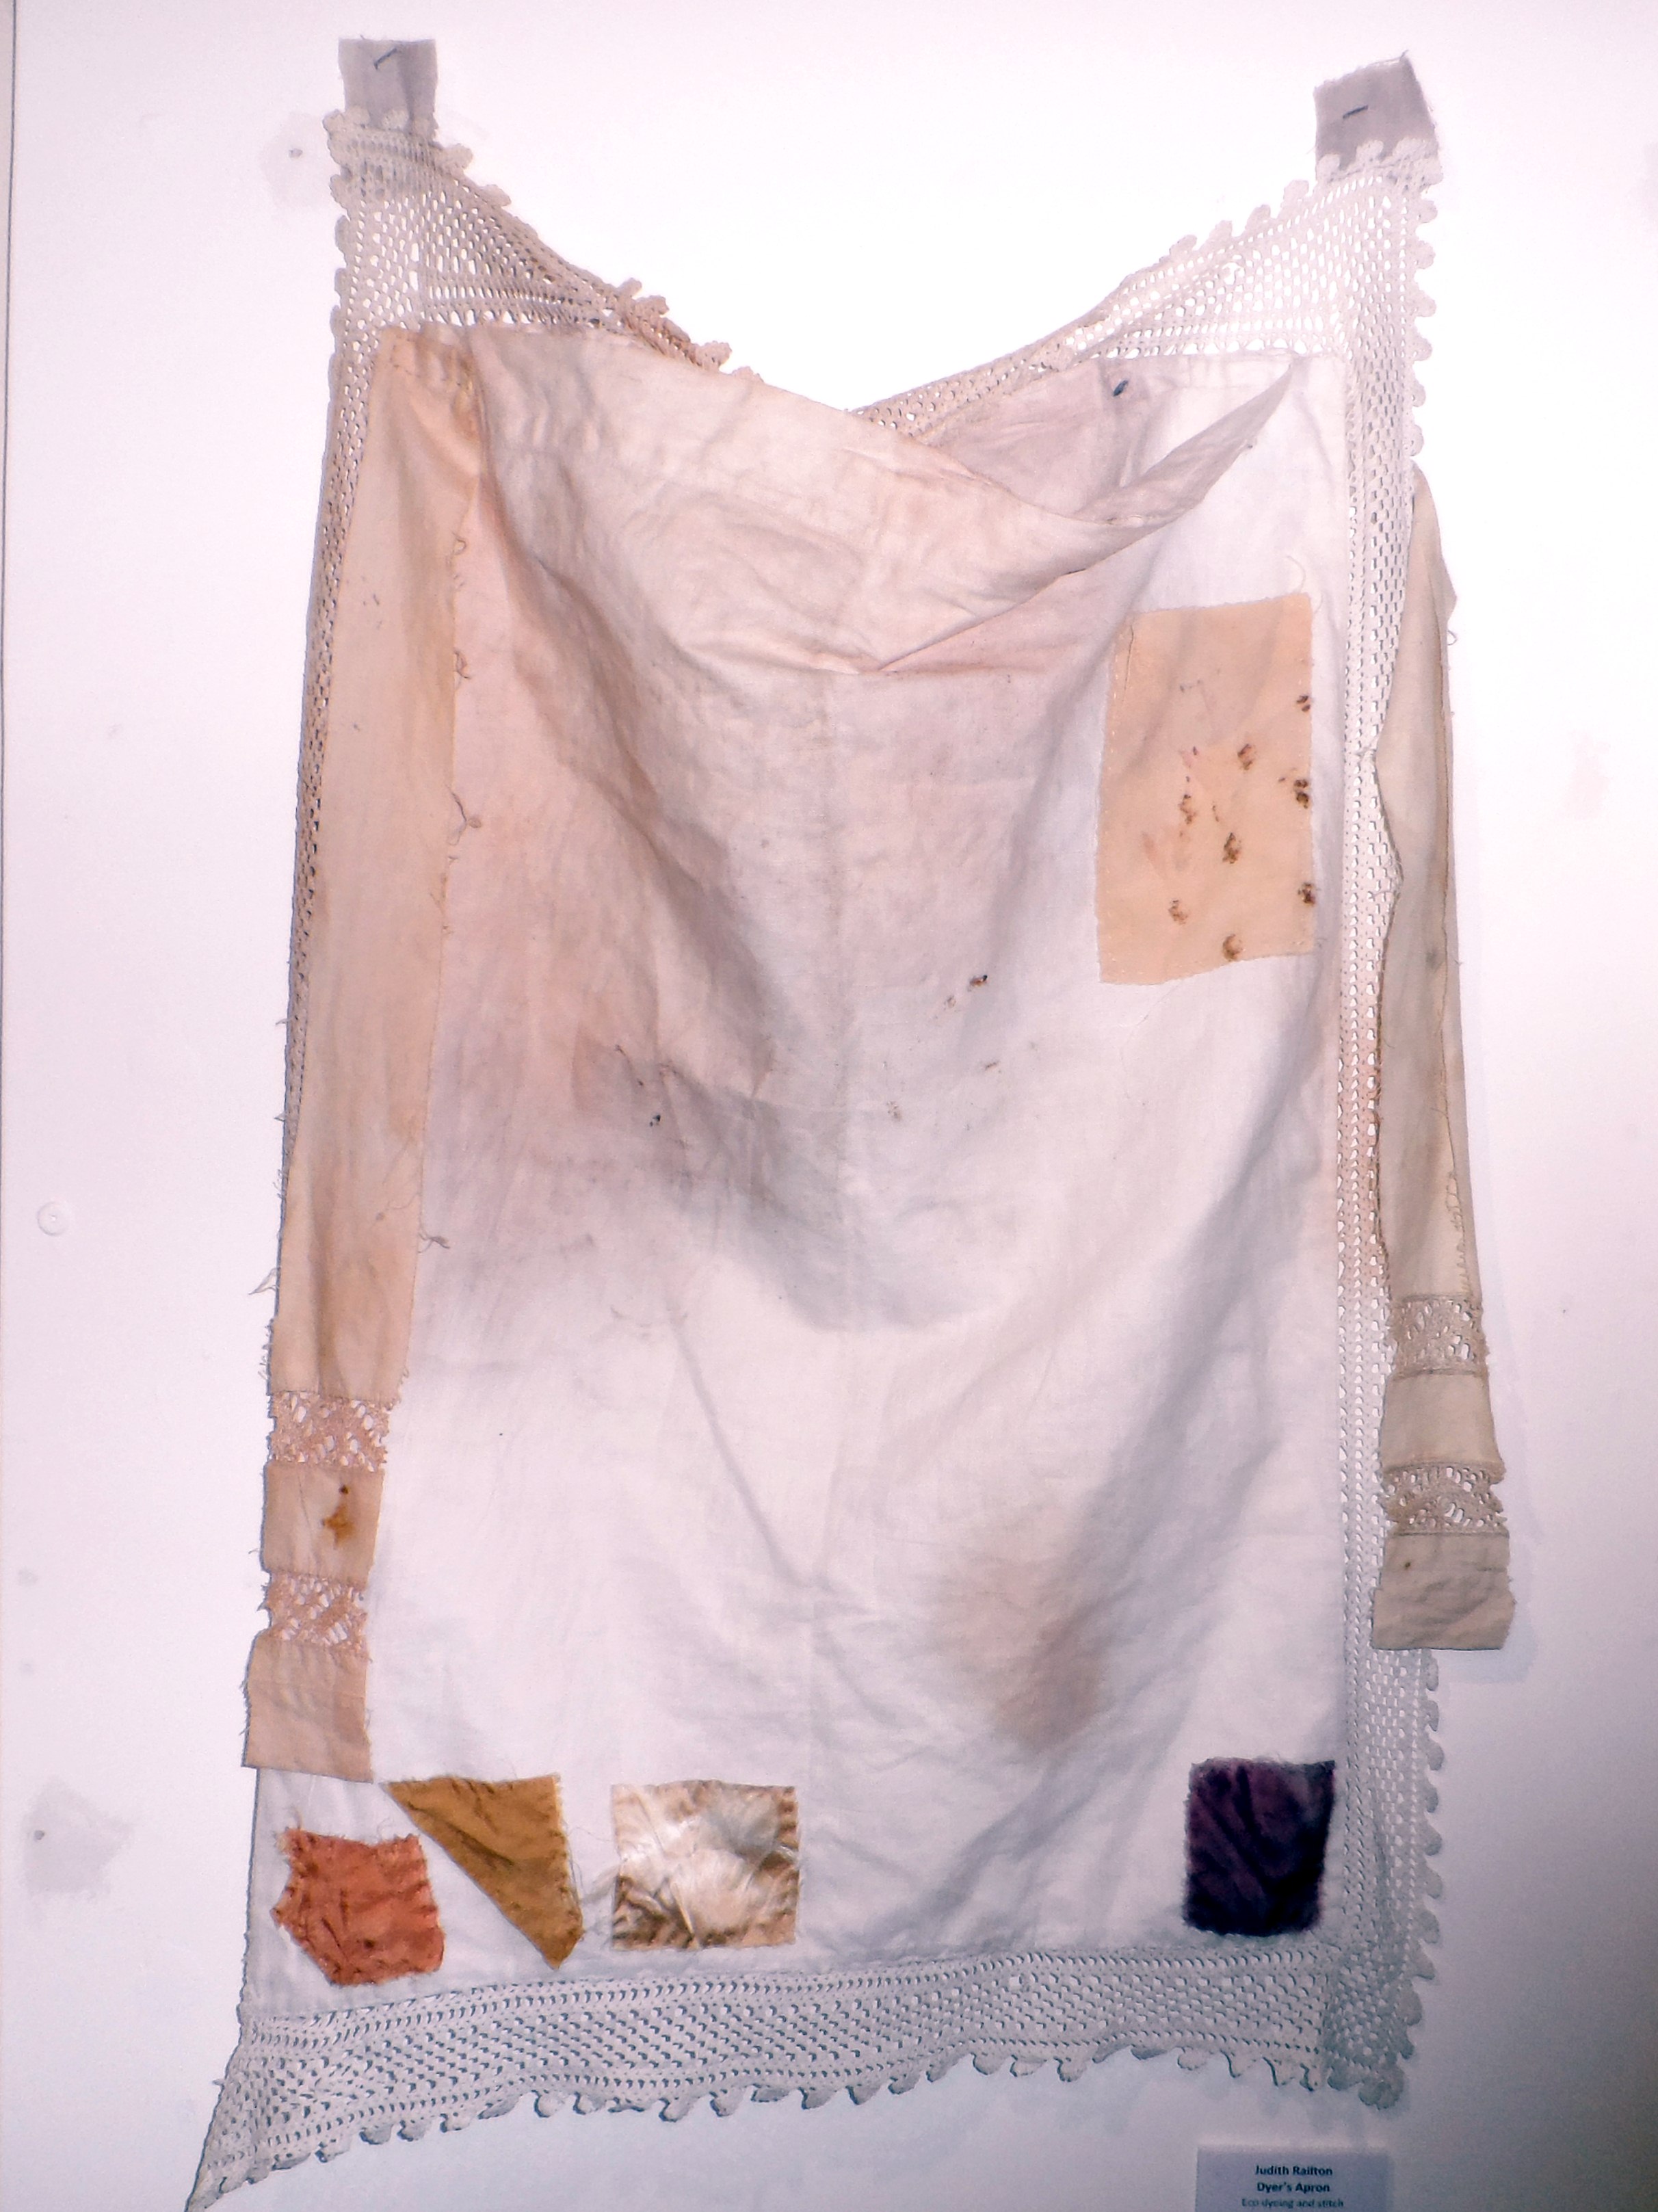 DYER'S APRON by Judith Railton, eco dyeing & stitch, Re-View Textile Group, Frodsham 2019